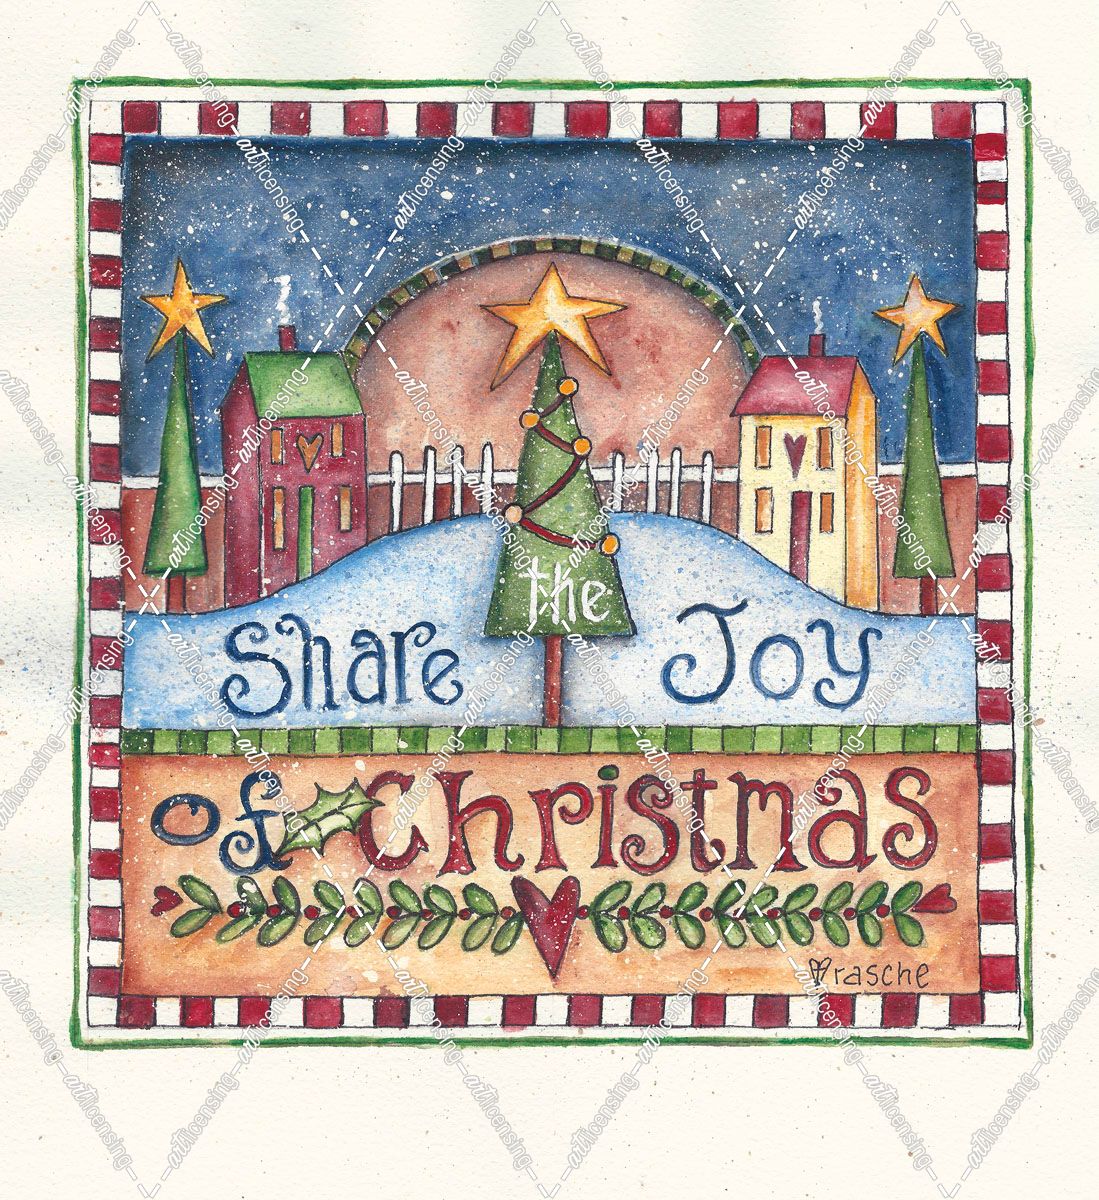 Share the Joy of Christmas